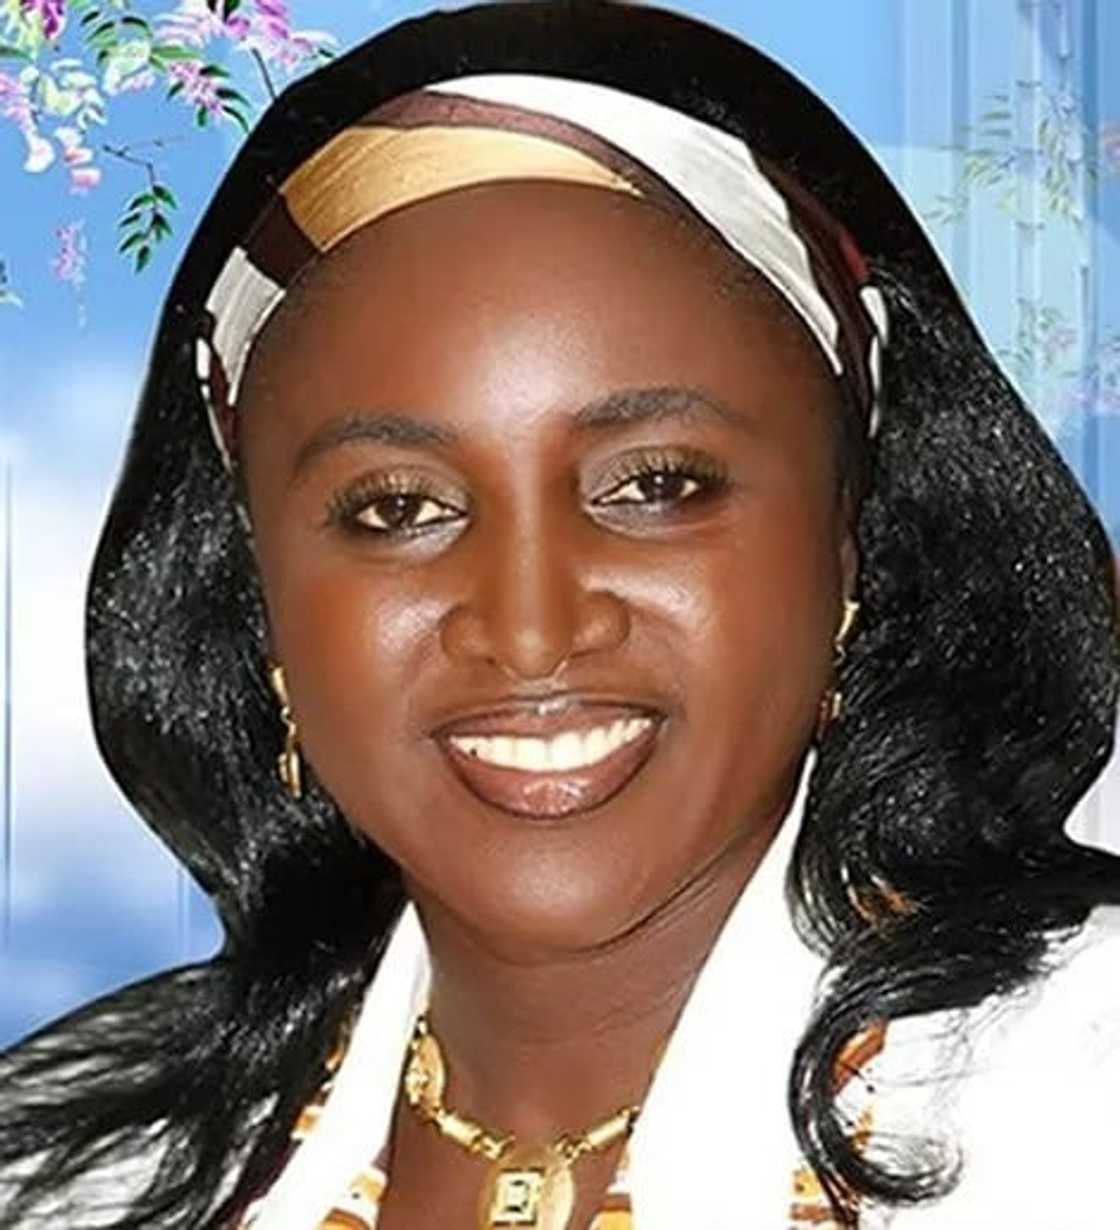 Meet Ghana's most beautiful female politicians